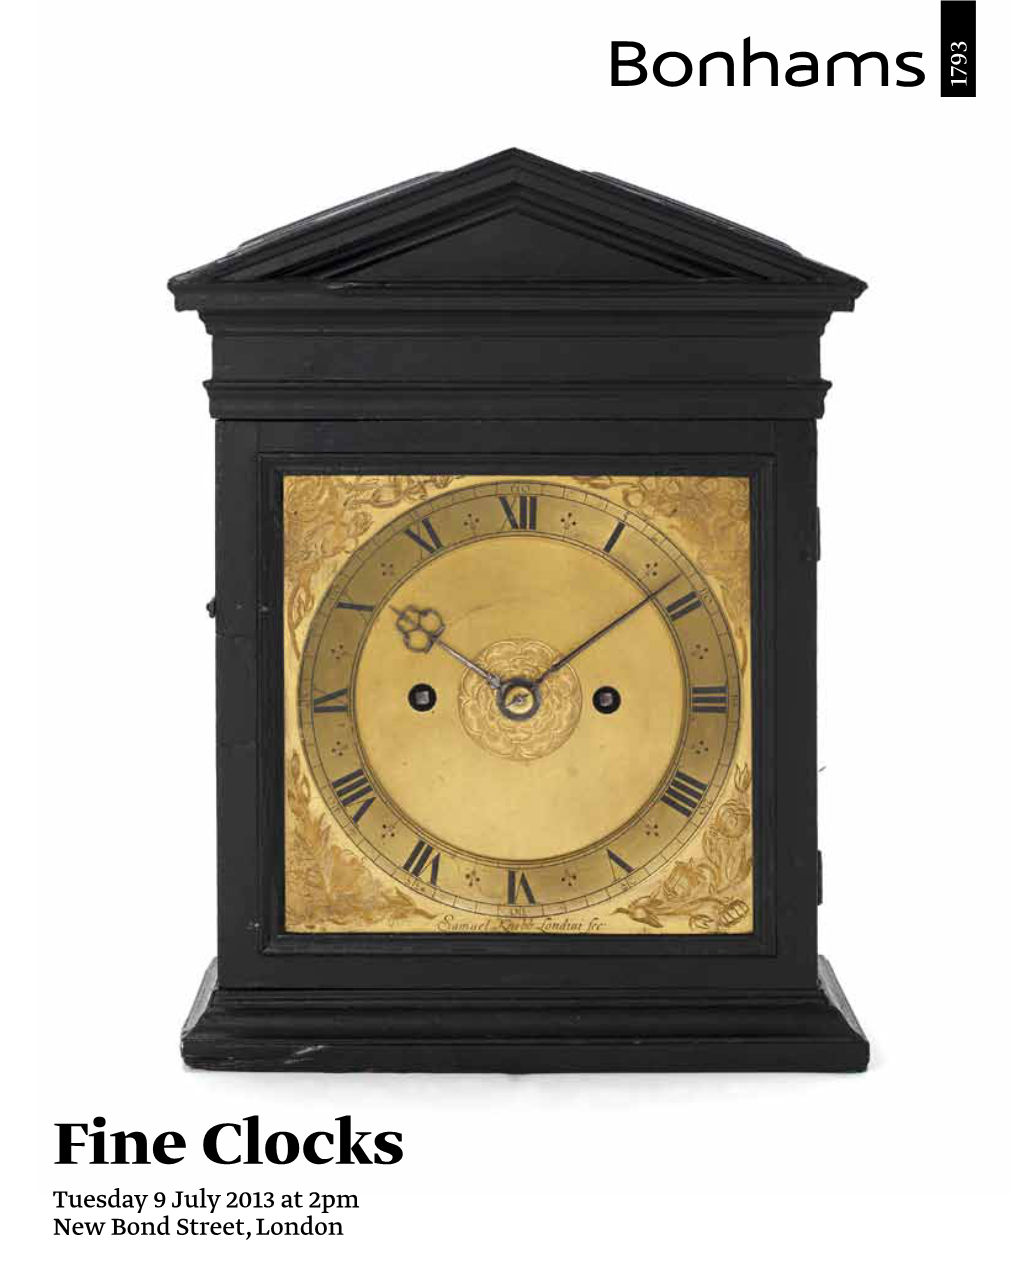 Fine Clocks Tuesday 9 July 2013 at 2Pm New Bond Street, London Bonhams 1793 Limited Bonhams 1793 Ltd Directors Bonhams UK Ltd Directors Registered No